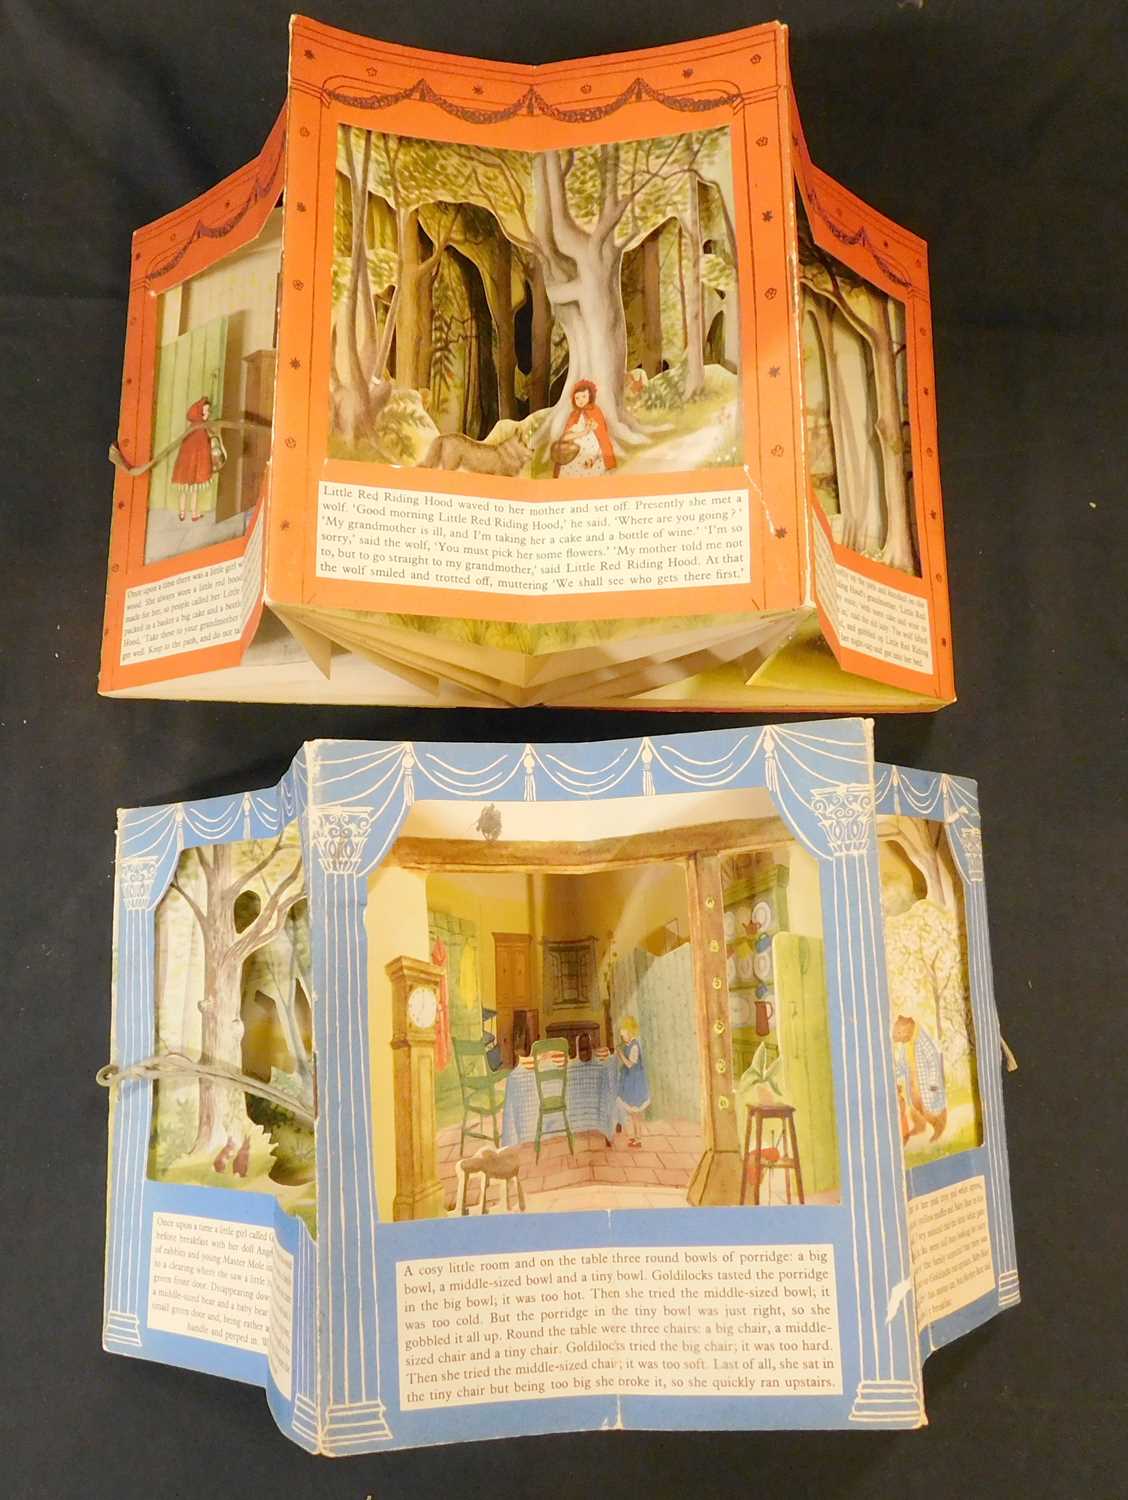 "PEEP SHOW" BOOKS: 5 titles: THE SLEEPING BEAUTY, ill Roland Pym, London, Folding Books circa - Image 3 of 3